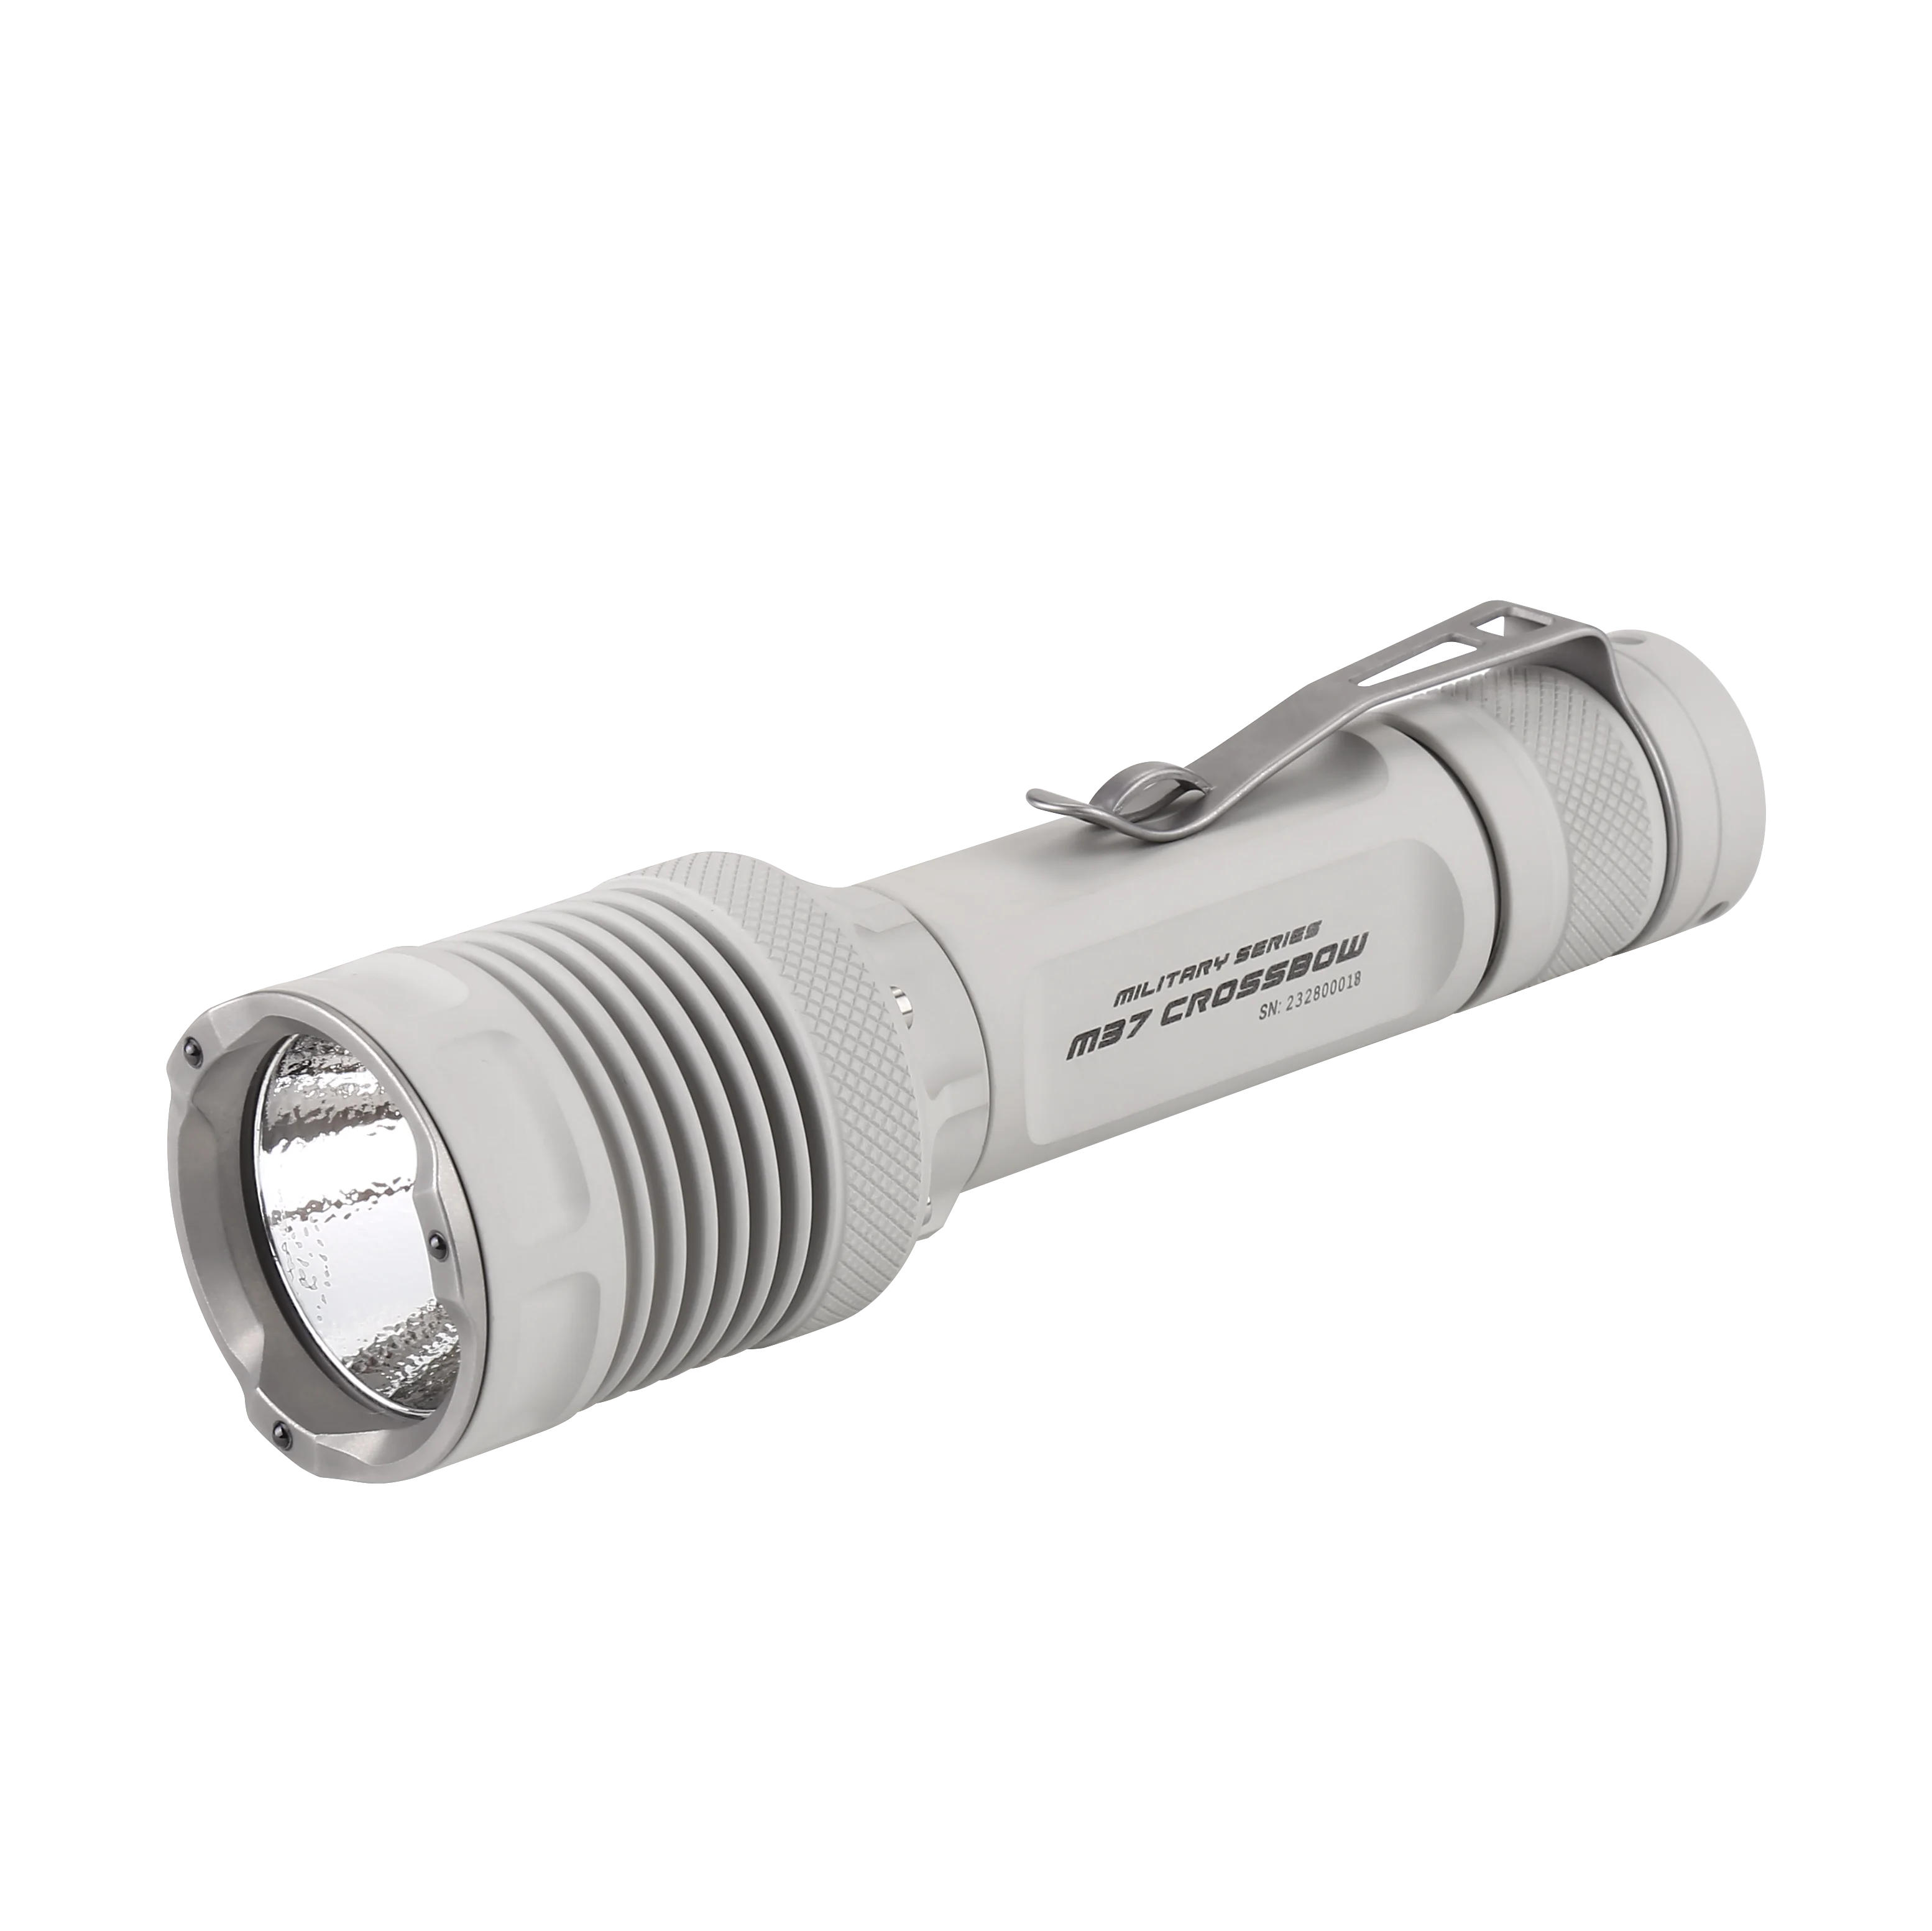 Lampe torche rechargeable M37 300 Lumens - Niteye - AMG Pro